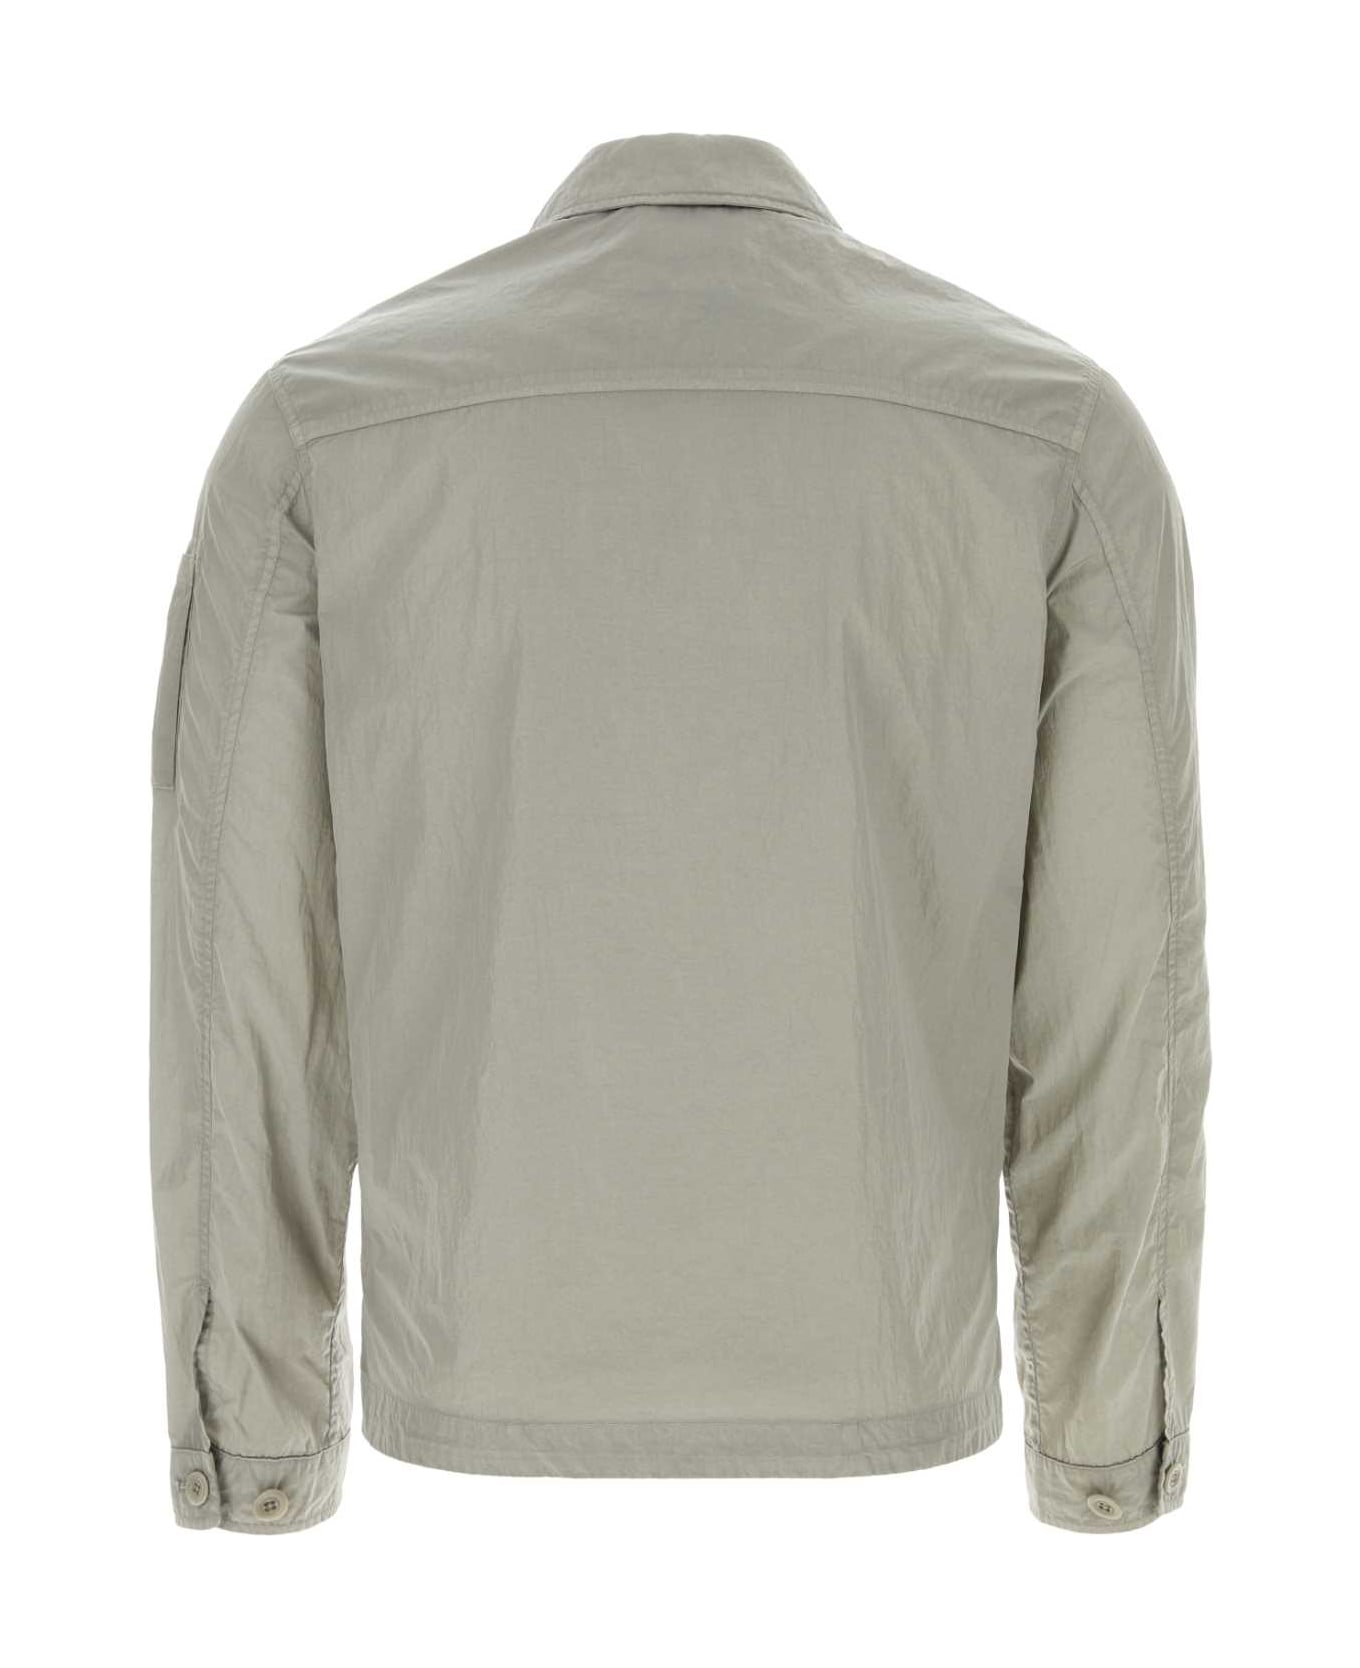 C.P. Company Grey Nylon Shirt - Grigio